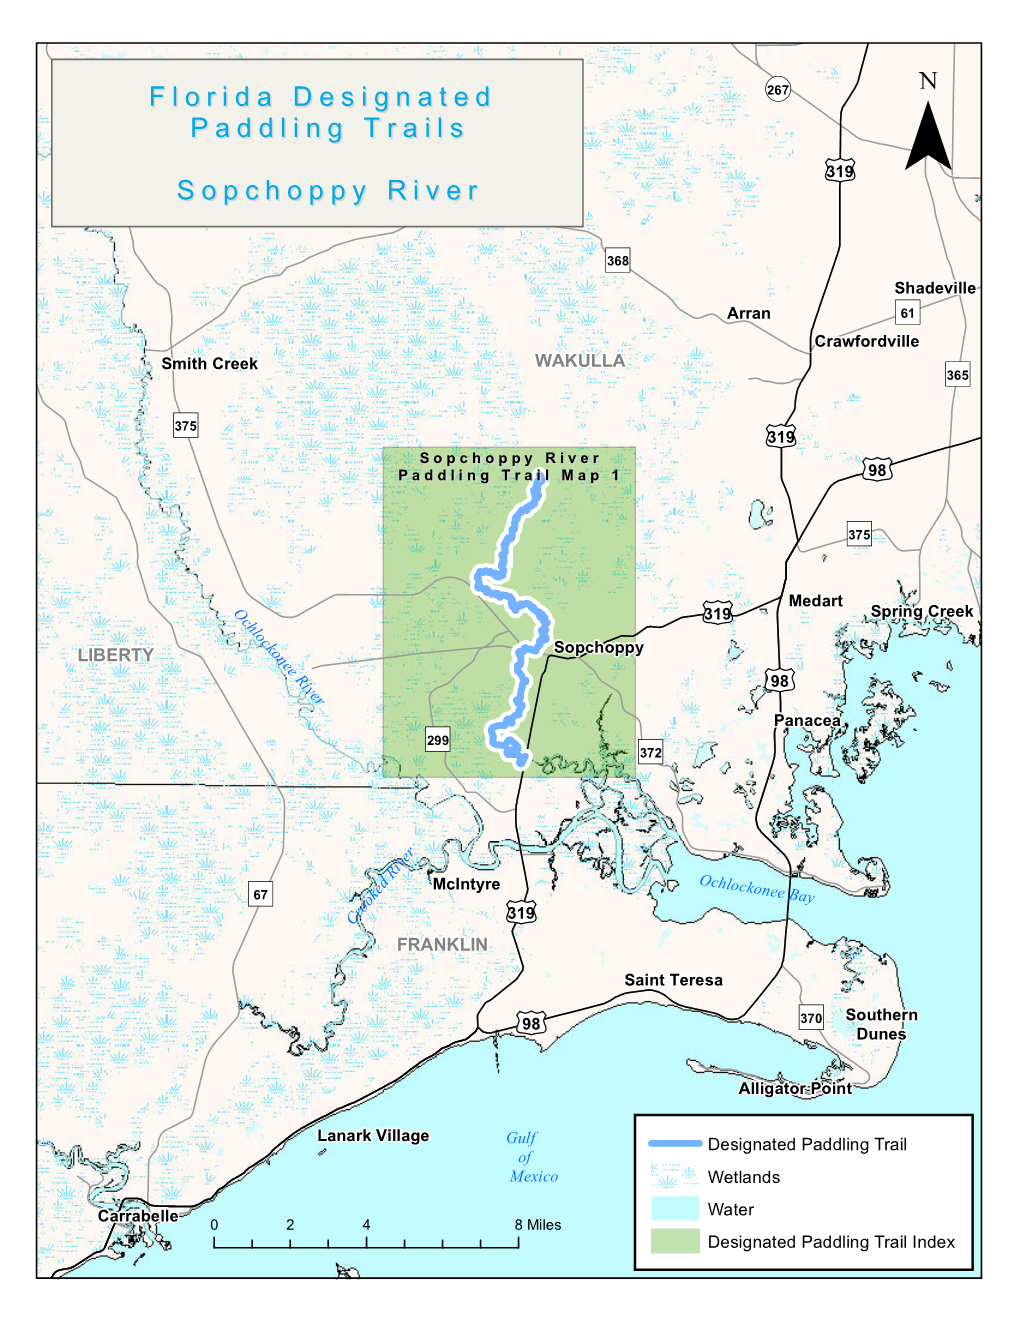 Sopchoppy River Paddling Guide